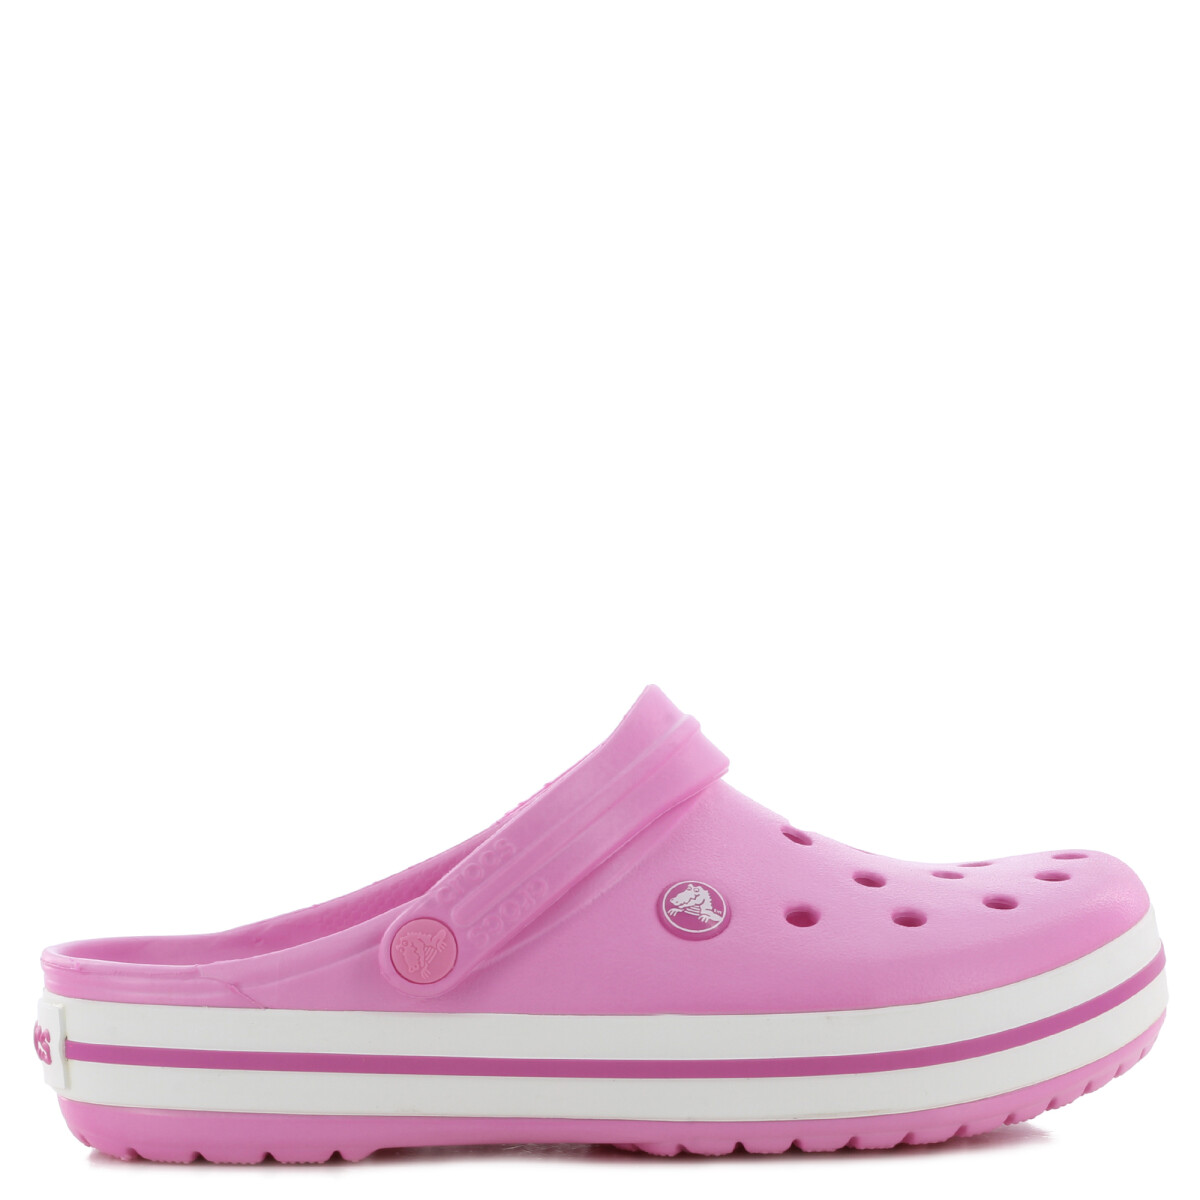 Zueco Crocband Crocs - Pink 